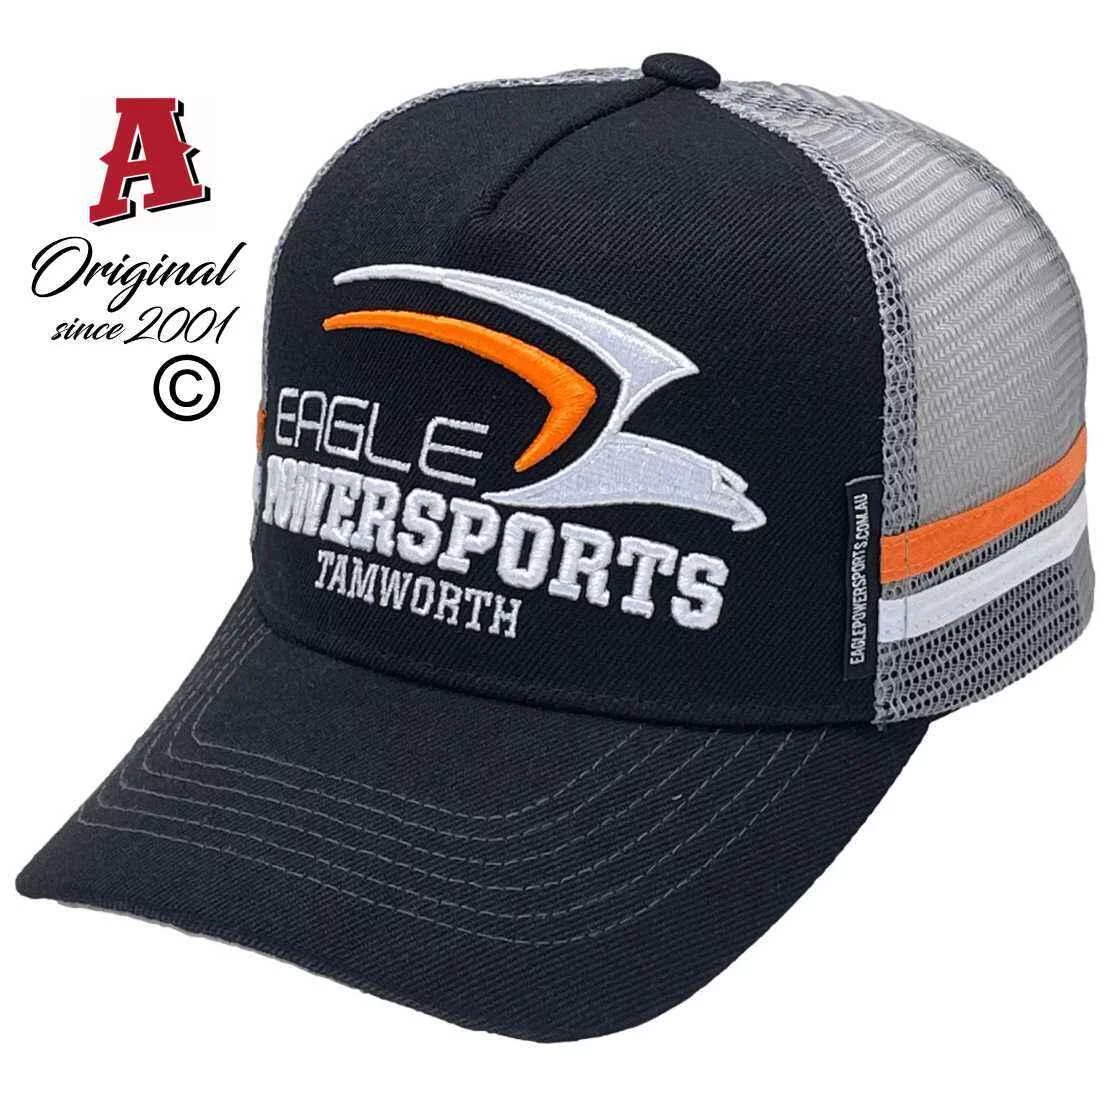 Eagle Powersports Tamworth NSW LP Midrange Aussie Trucker Hats with Australian HeadFit Crown & Double SideBands Black Grey Orange